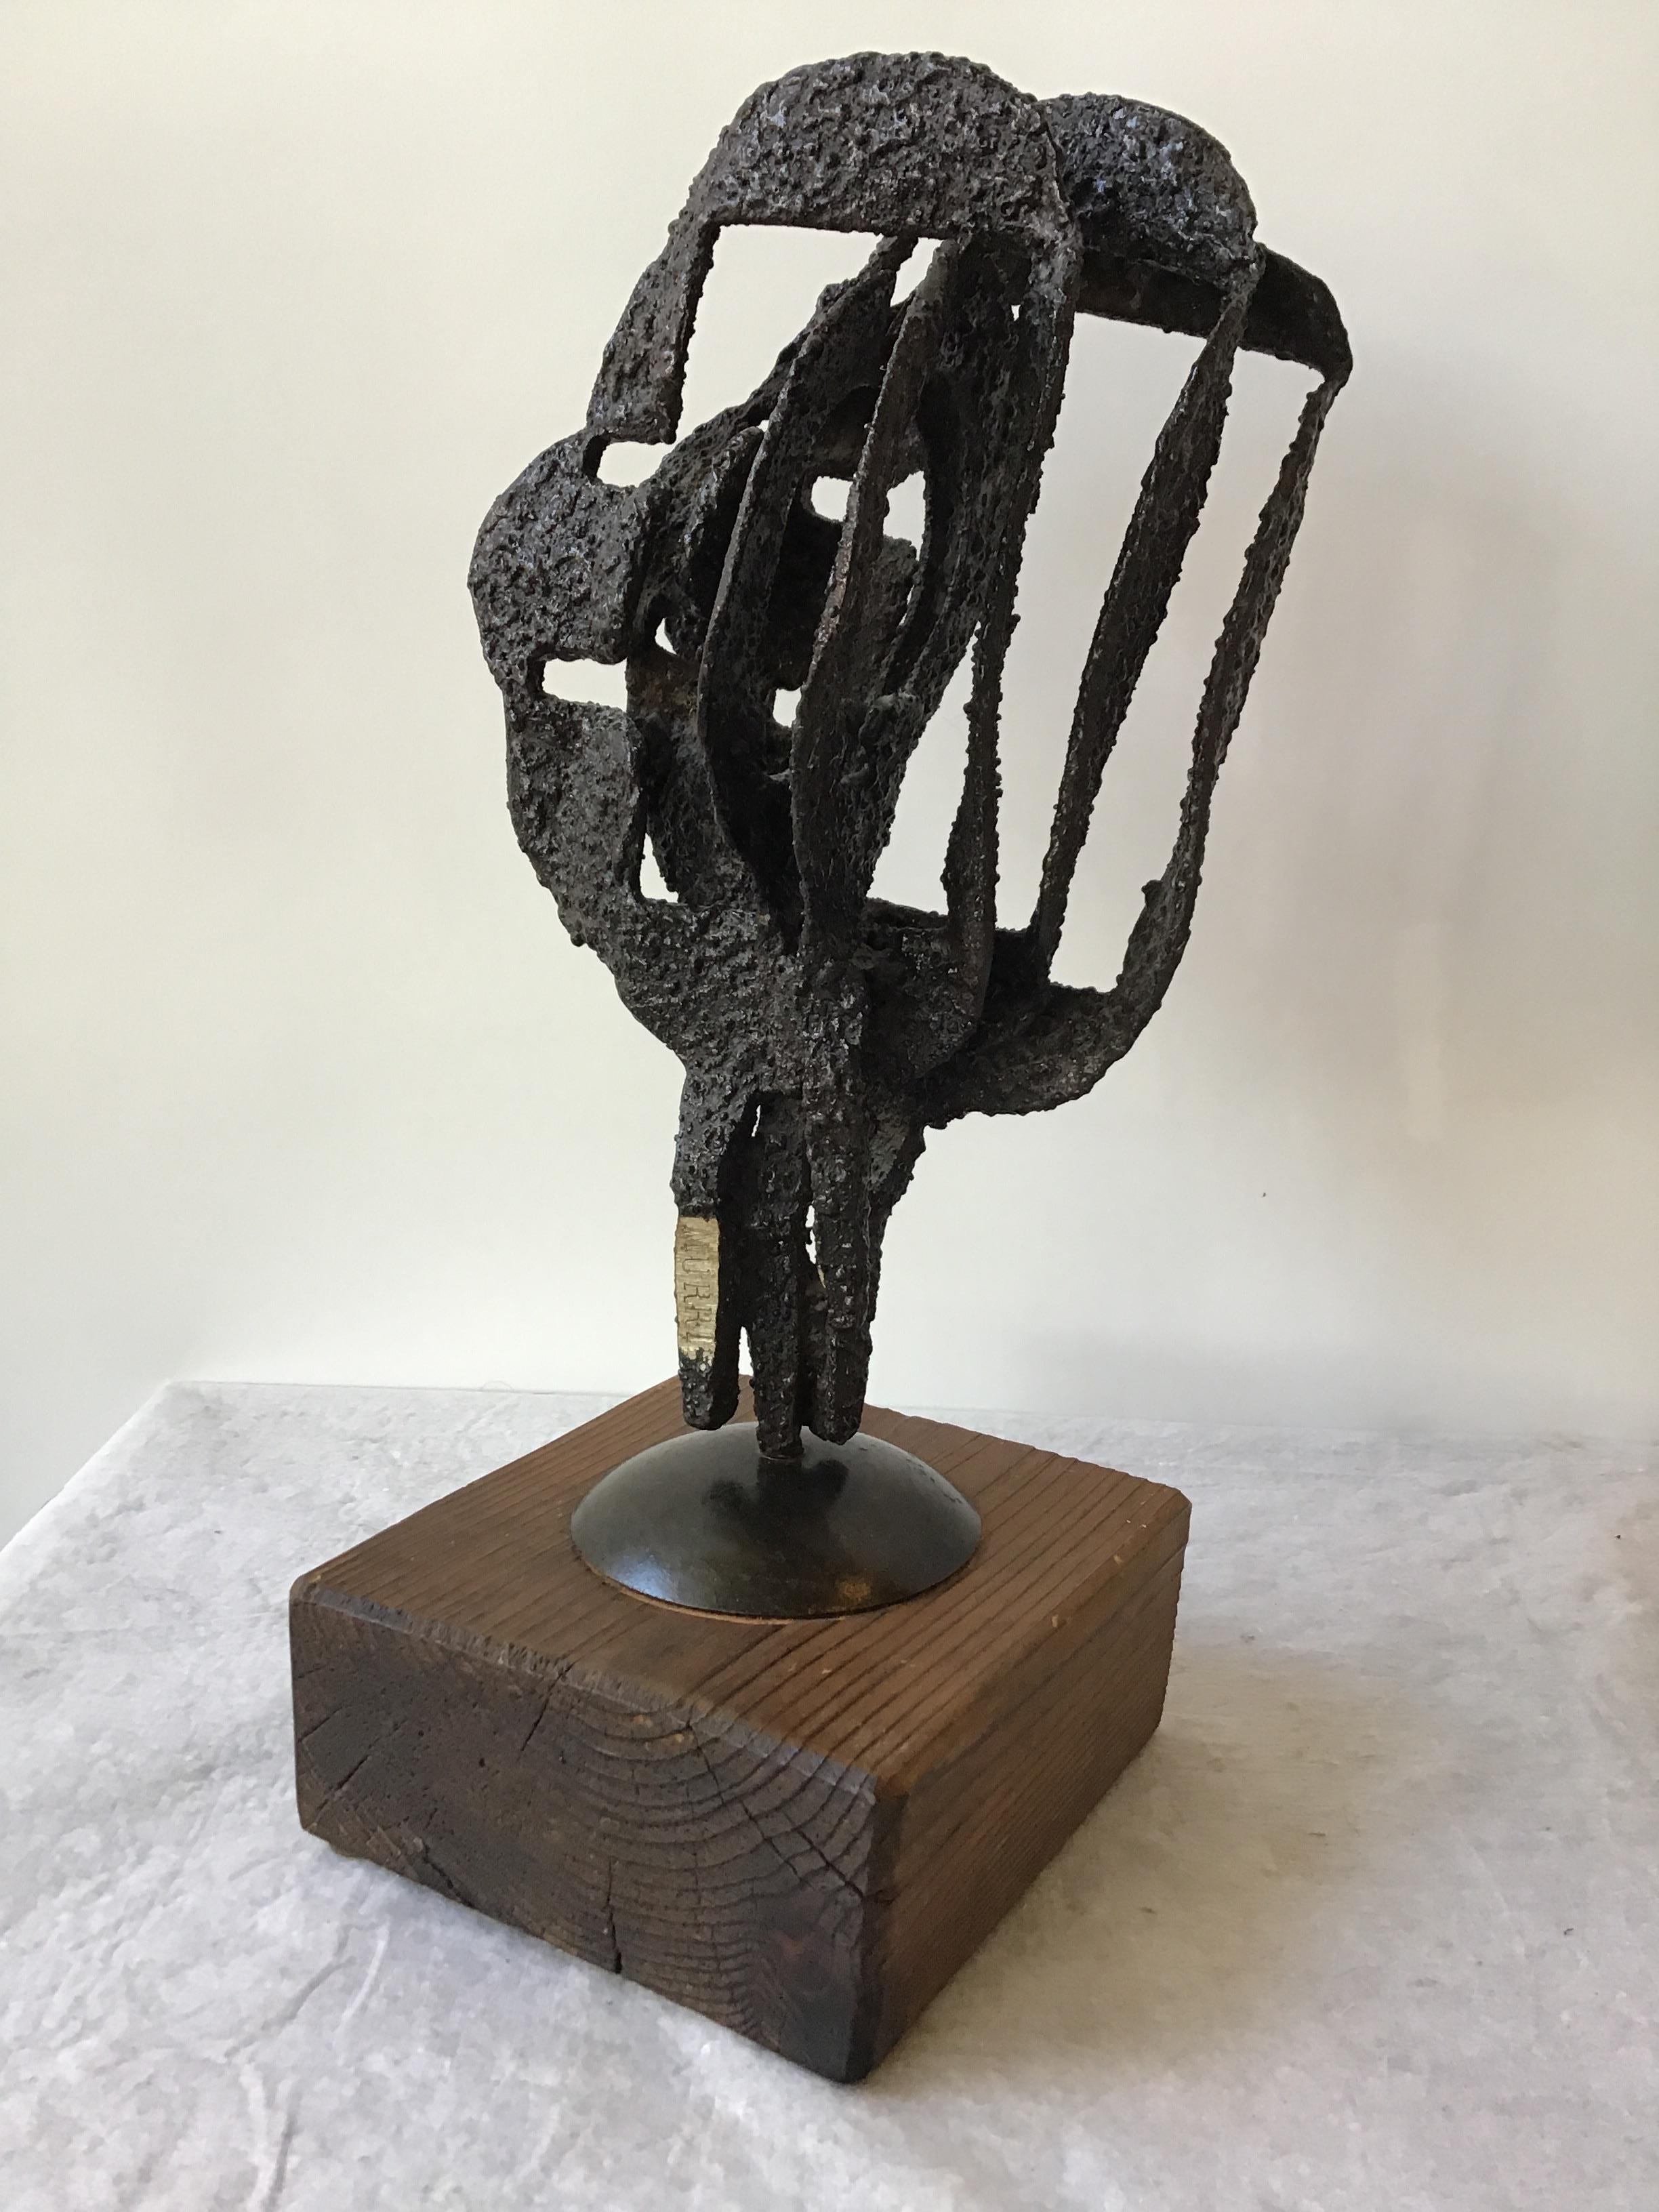 Brutalist style abstract iron sculpture by Antonio Murri.